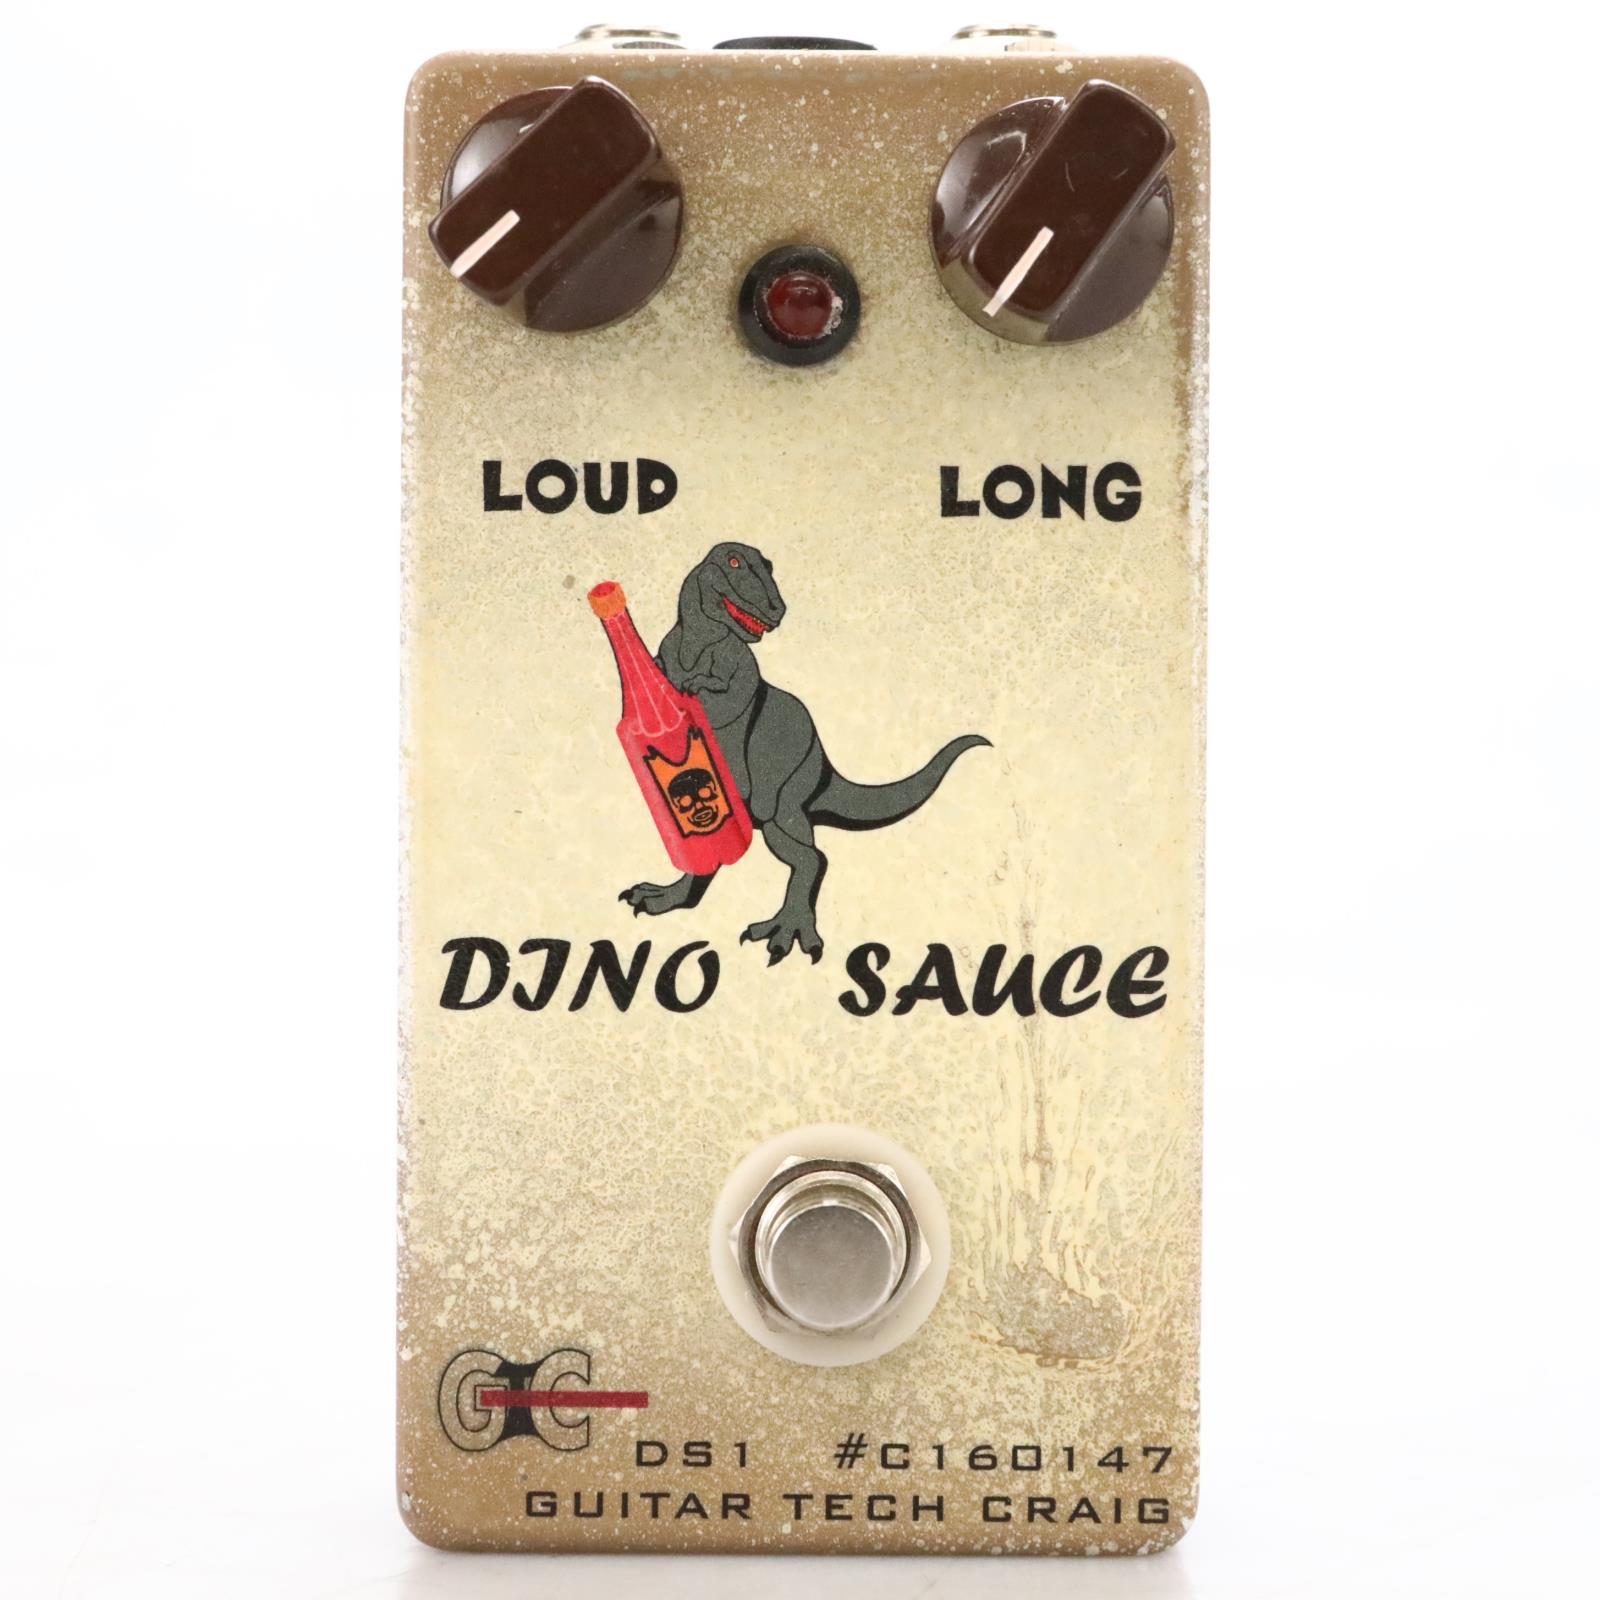 Guitar Tech Craig GTC Dino Sauce DS1 Compressor Effects Pedal w/ Box #50255